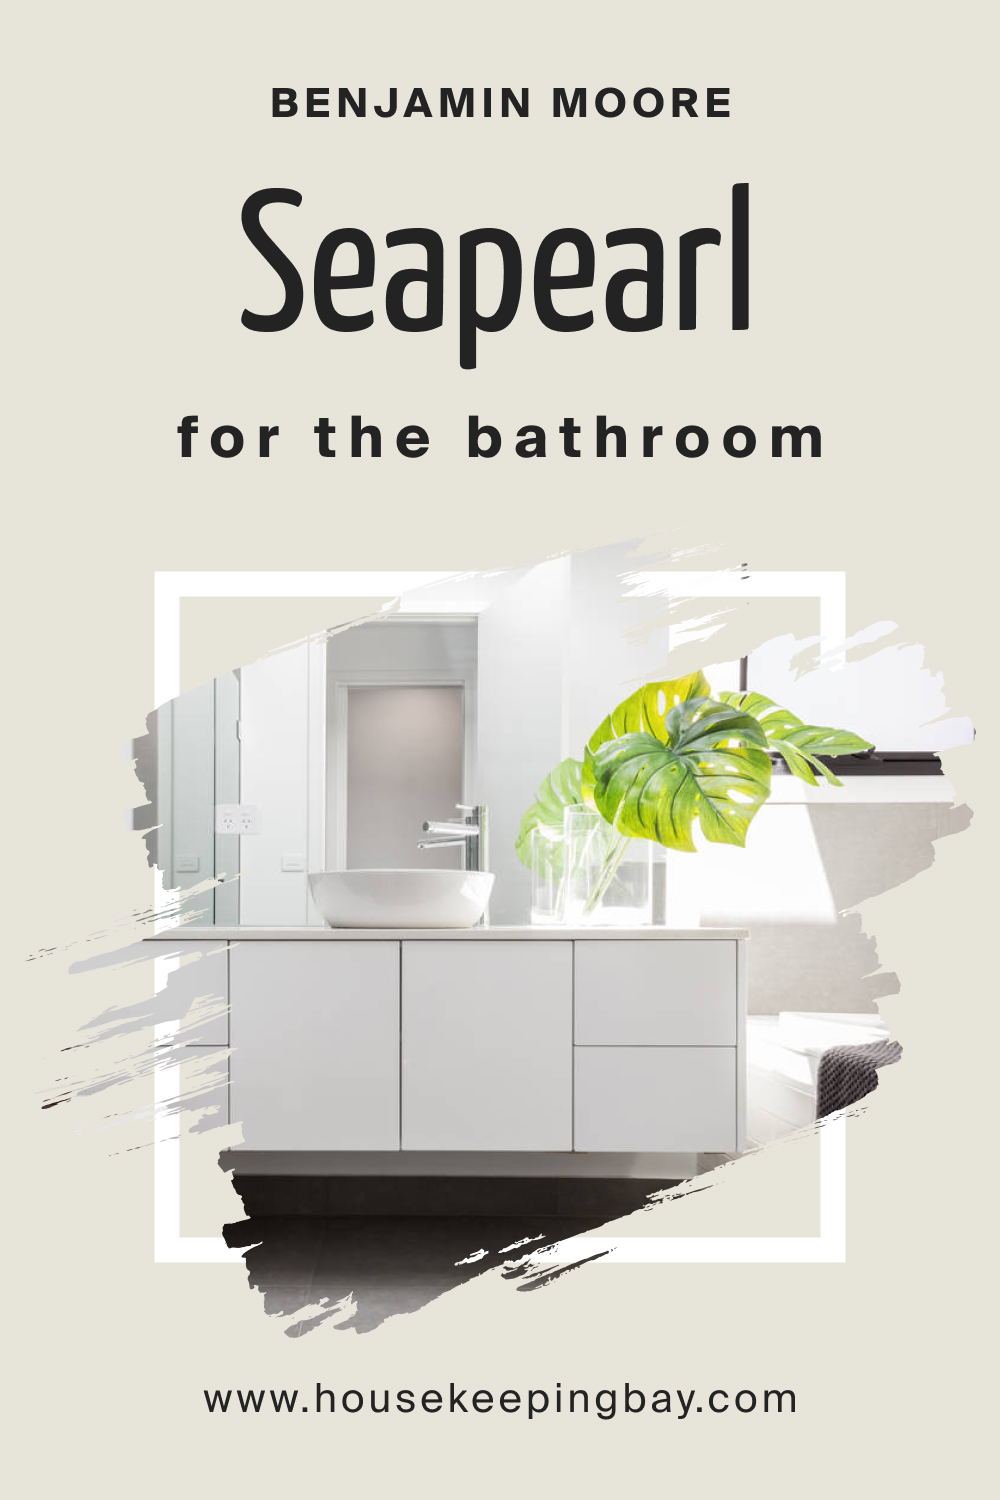 Benjamin Moore. Seapearl OC 19 for the Bathroom